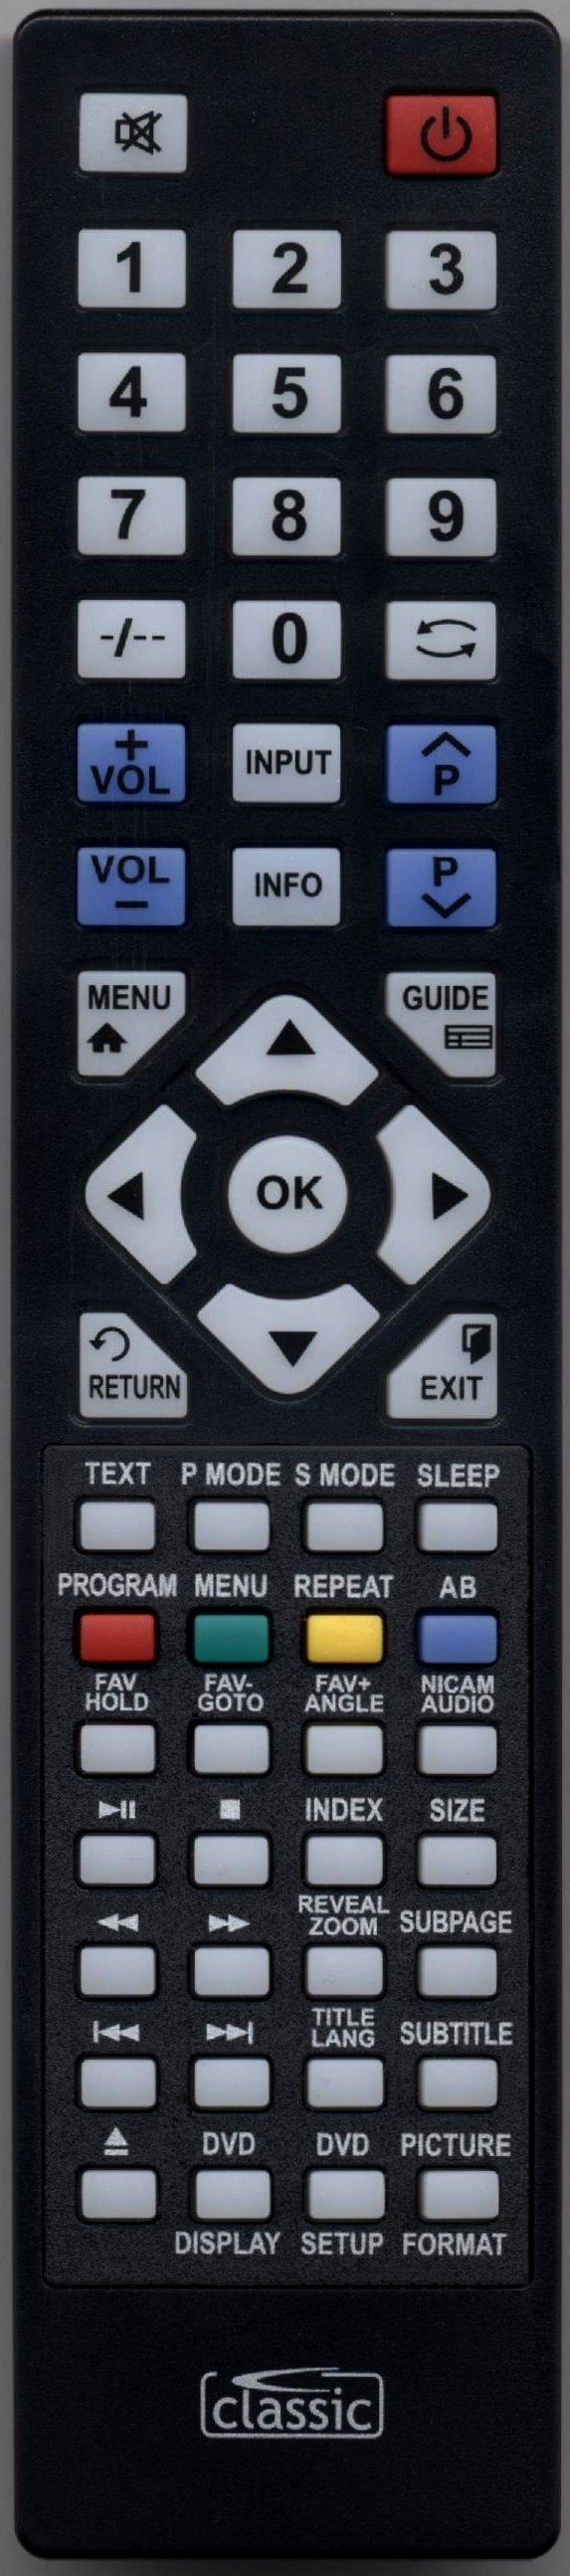 UMC X26/16-GB-TCD-UK Remote Control